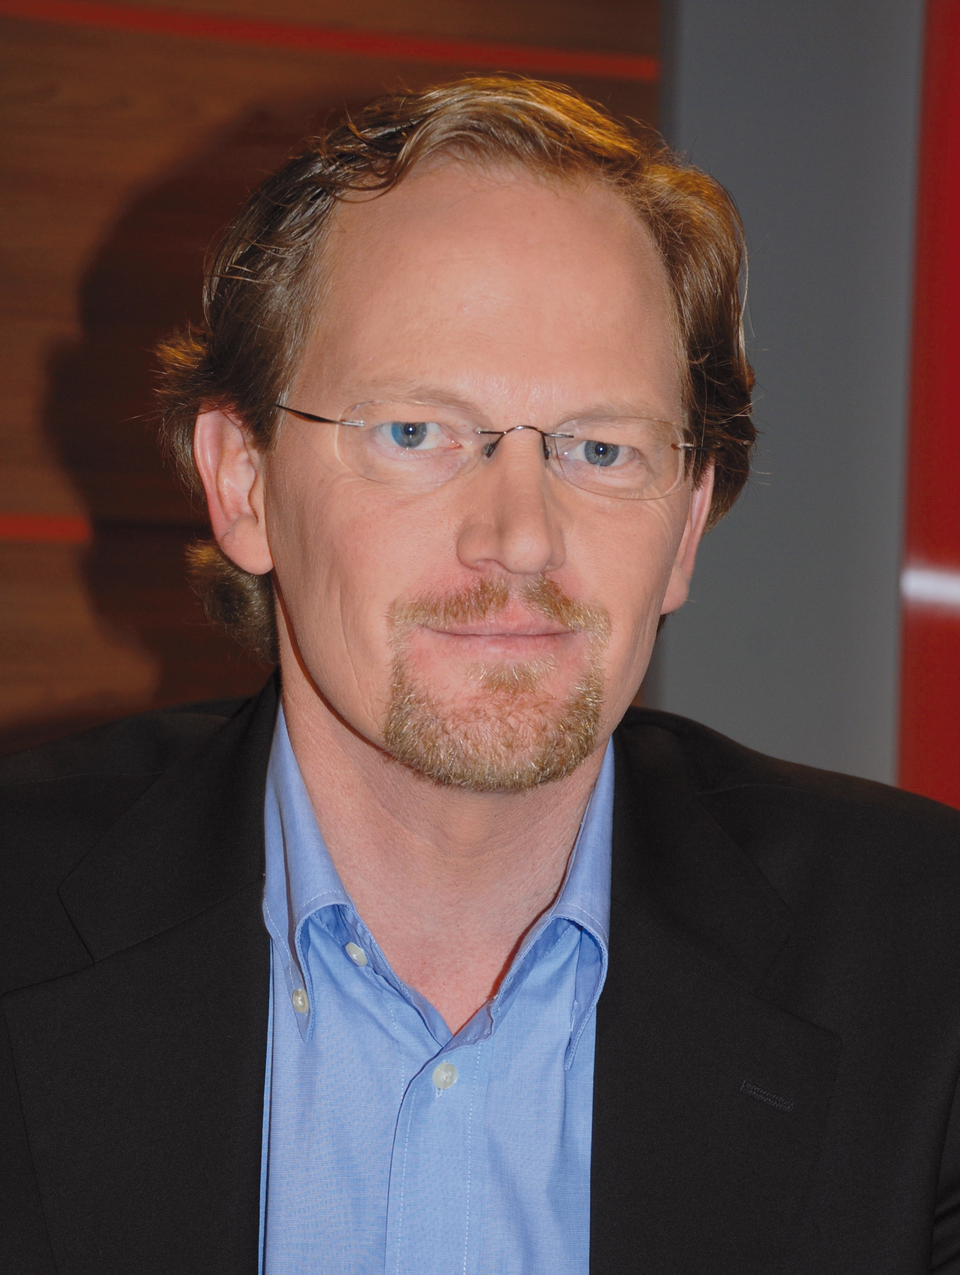 Professor Dr. Andreas Hamann, Diabetologe, Hochtaunus-Kliniken Bad Homburg